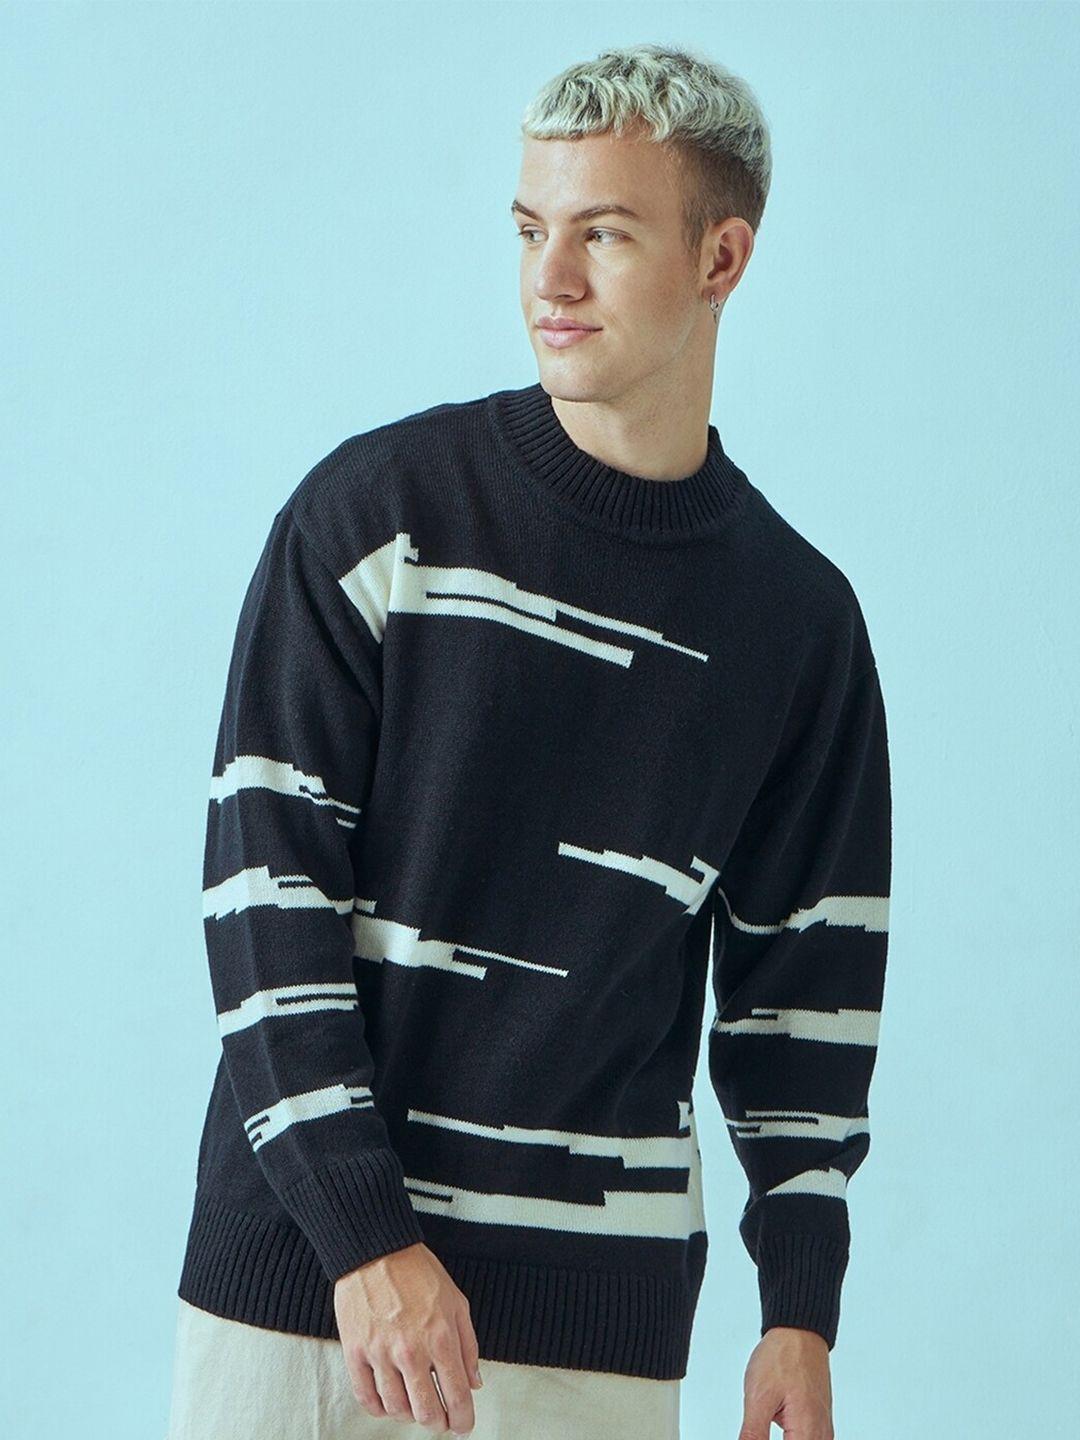 bewakoof all over printed flatknit sweater